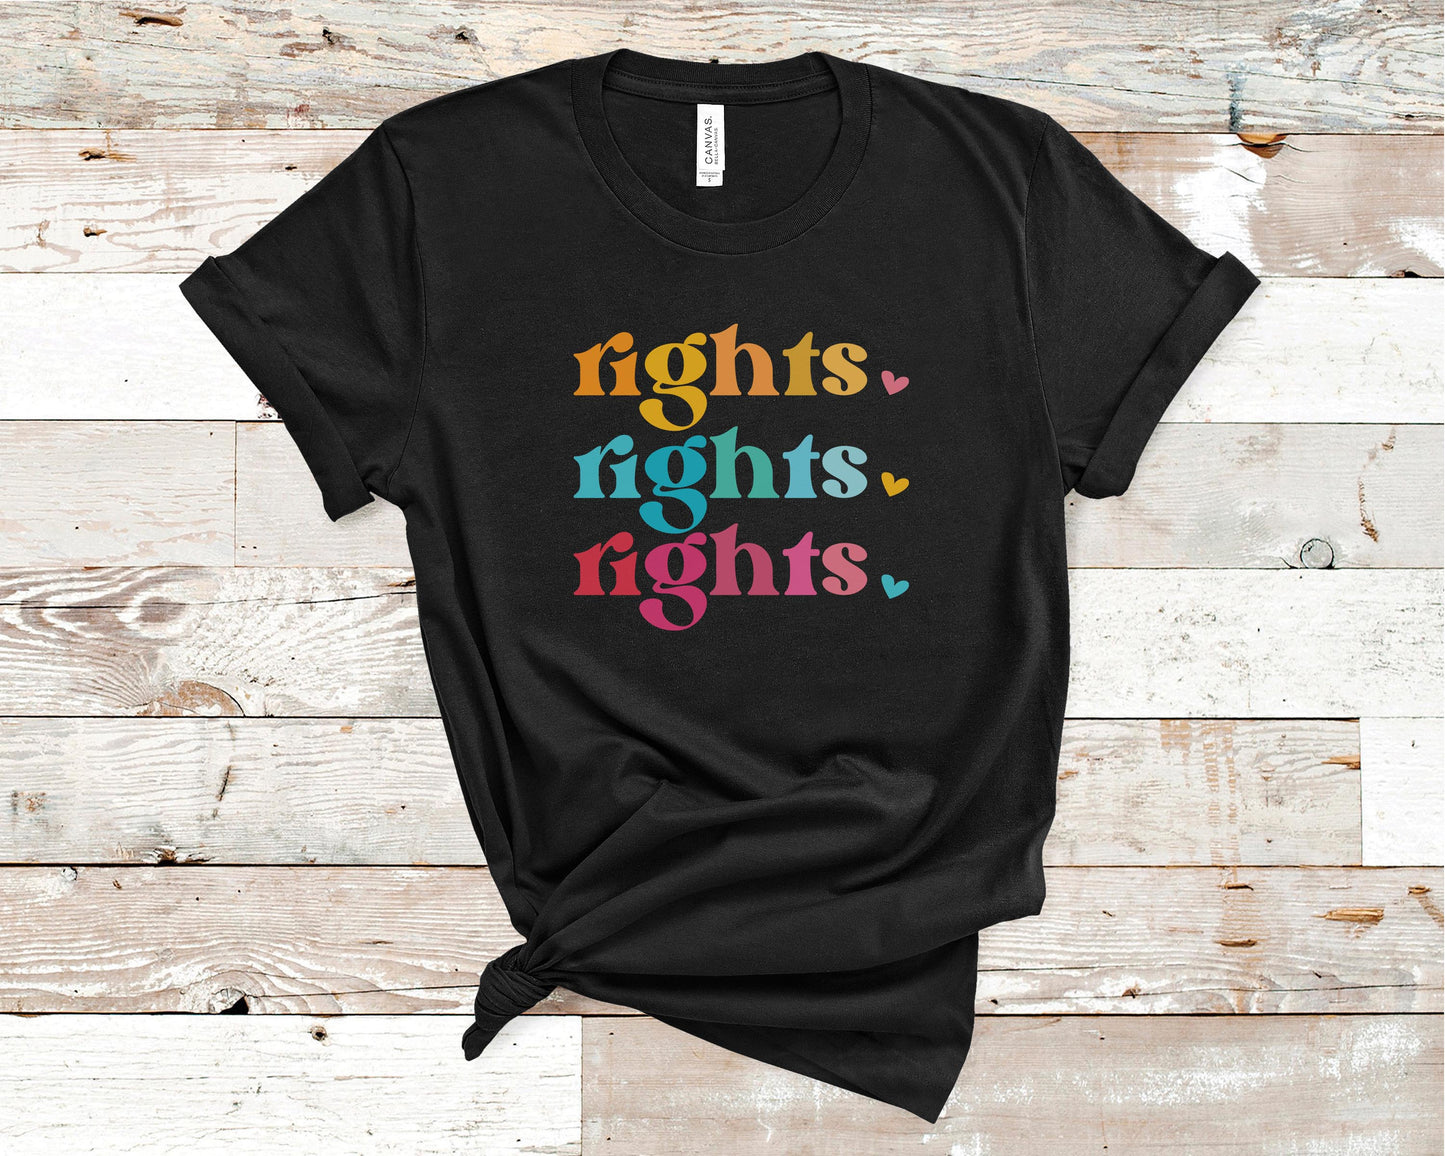 Rights Rights Rights - LGBTQ